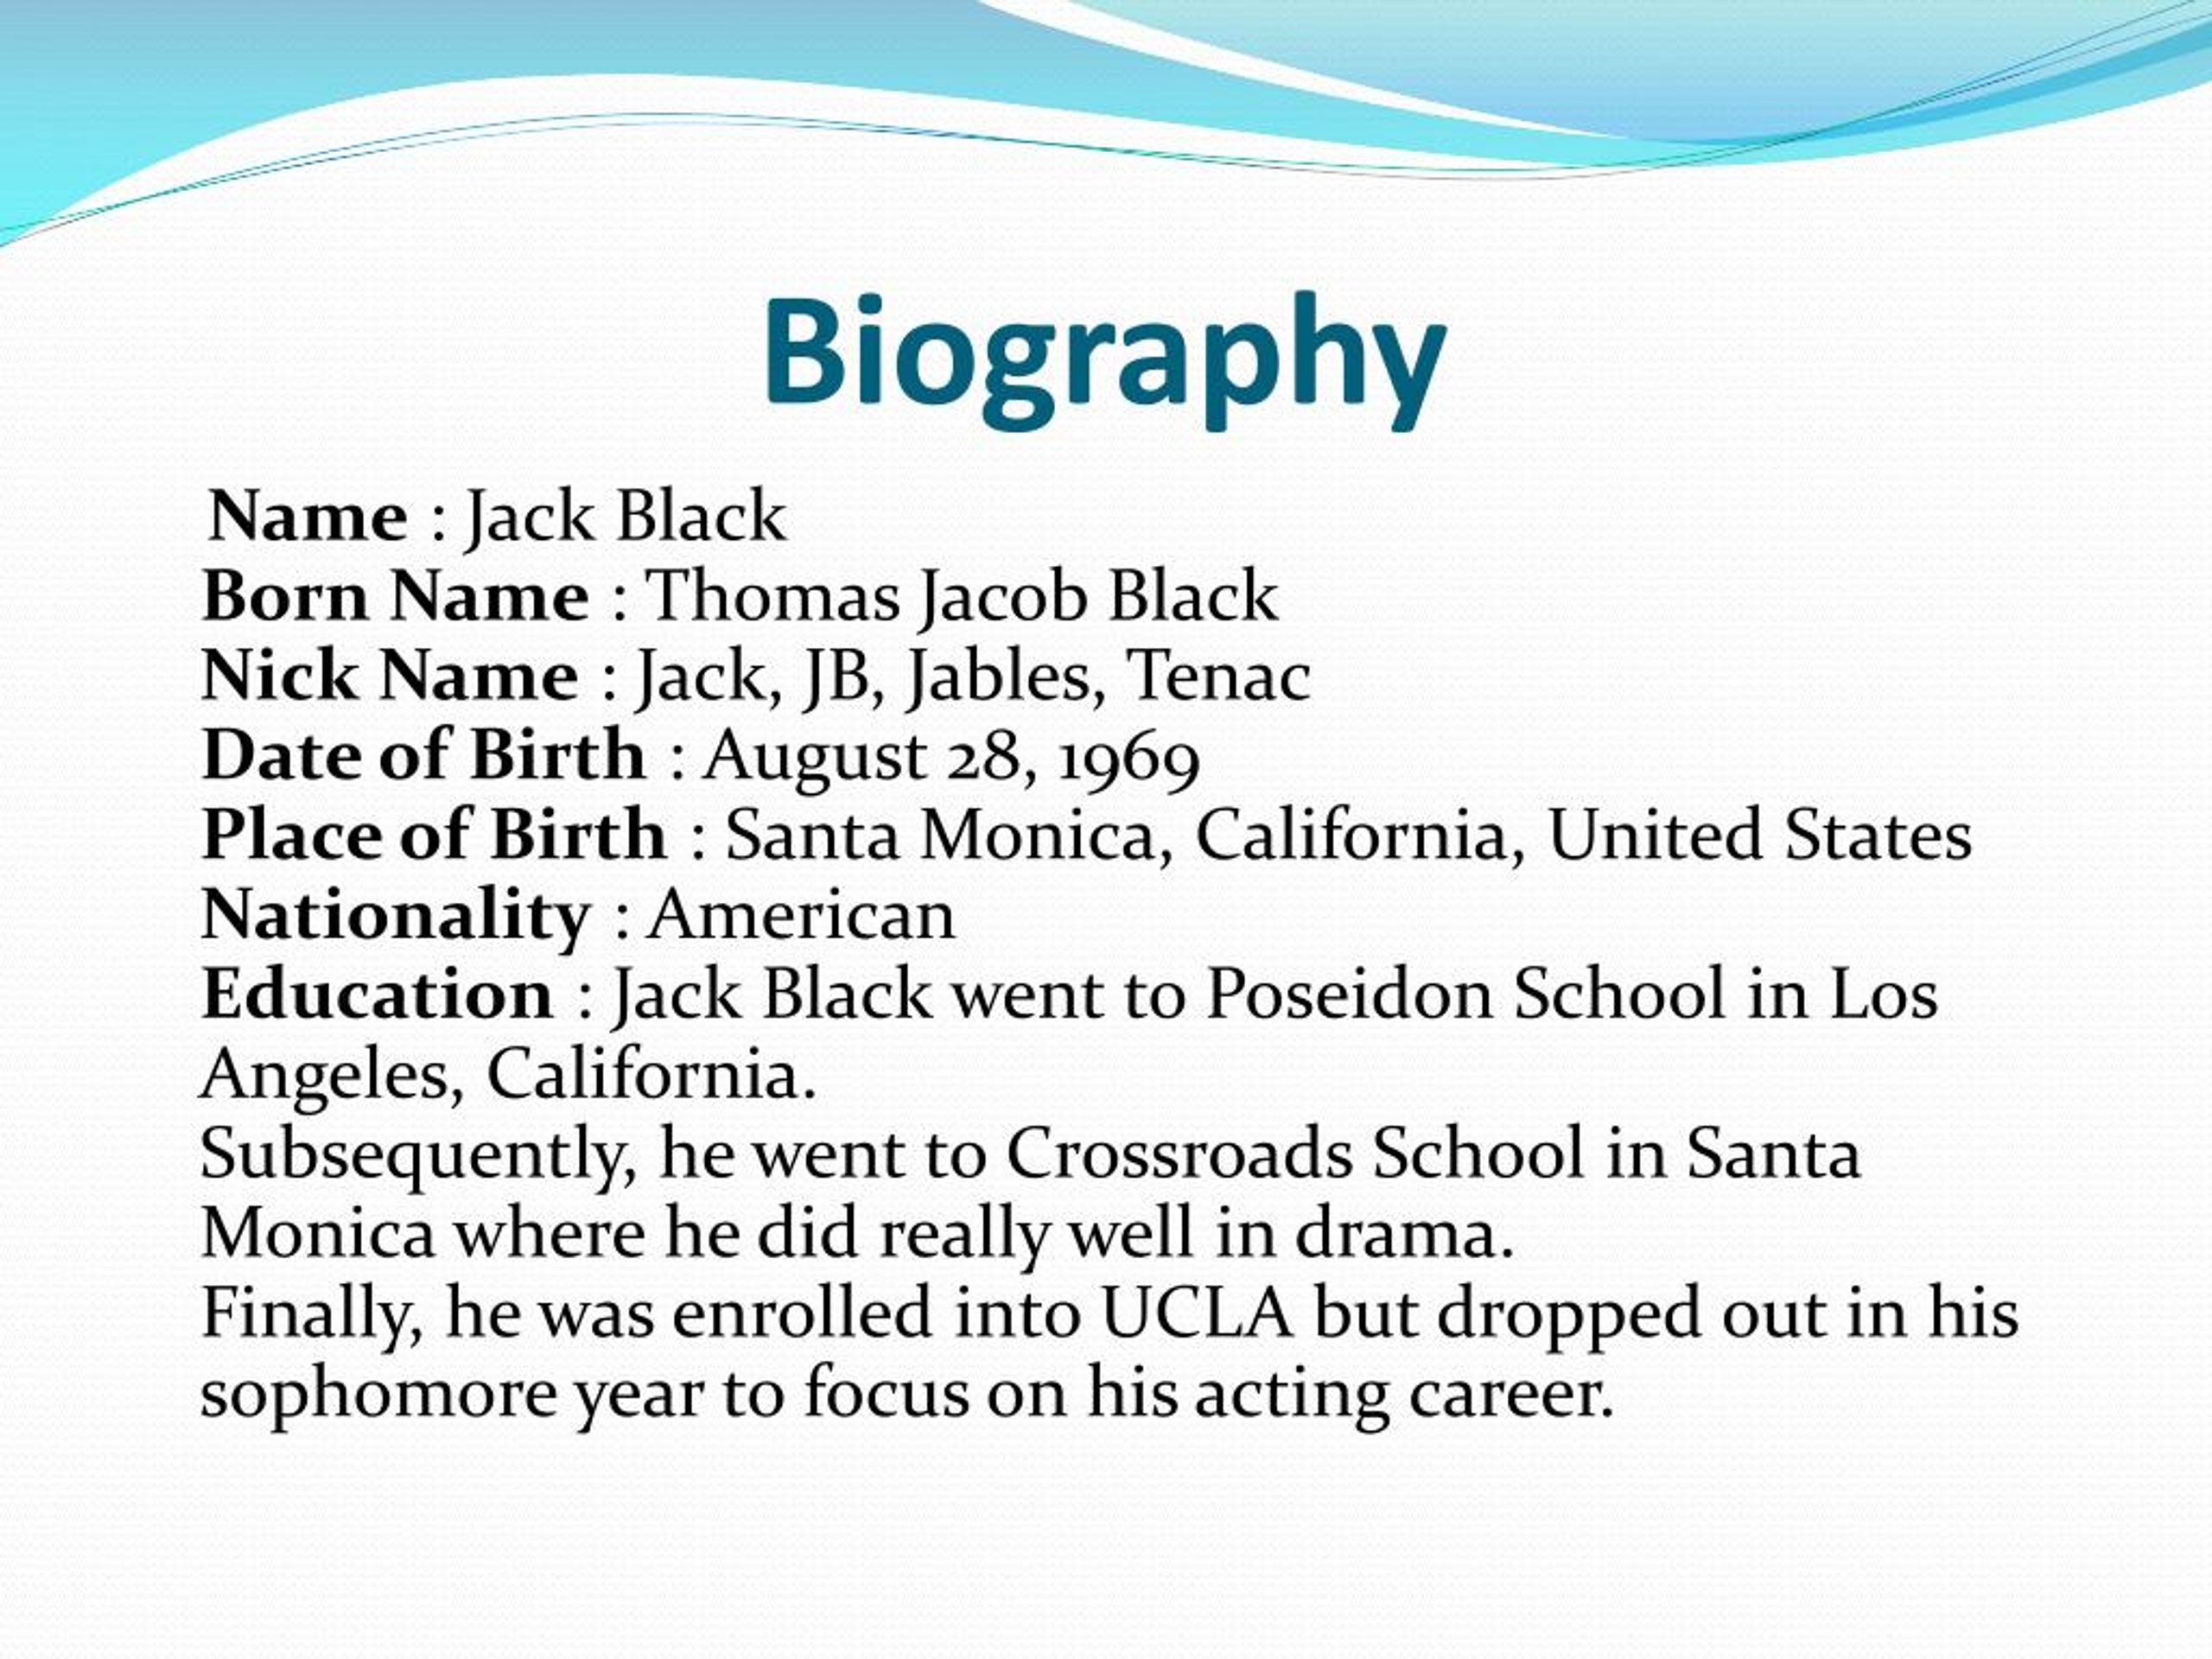 Jack Black Biography